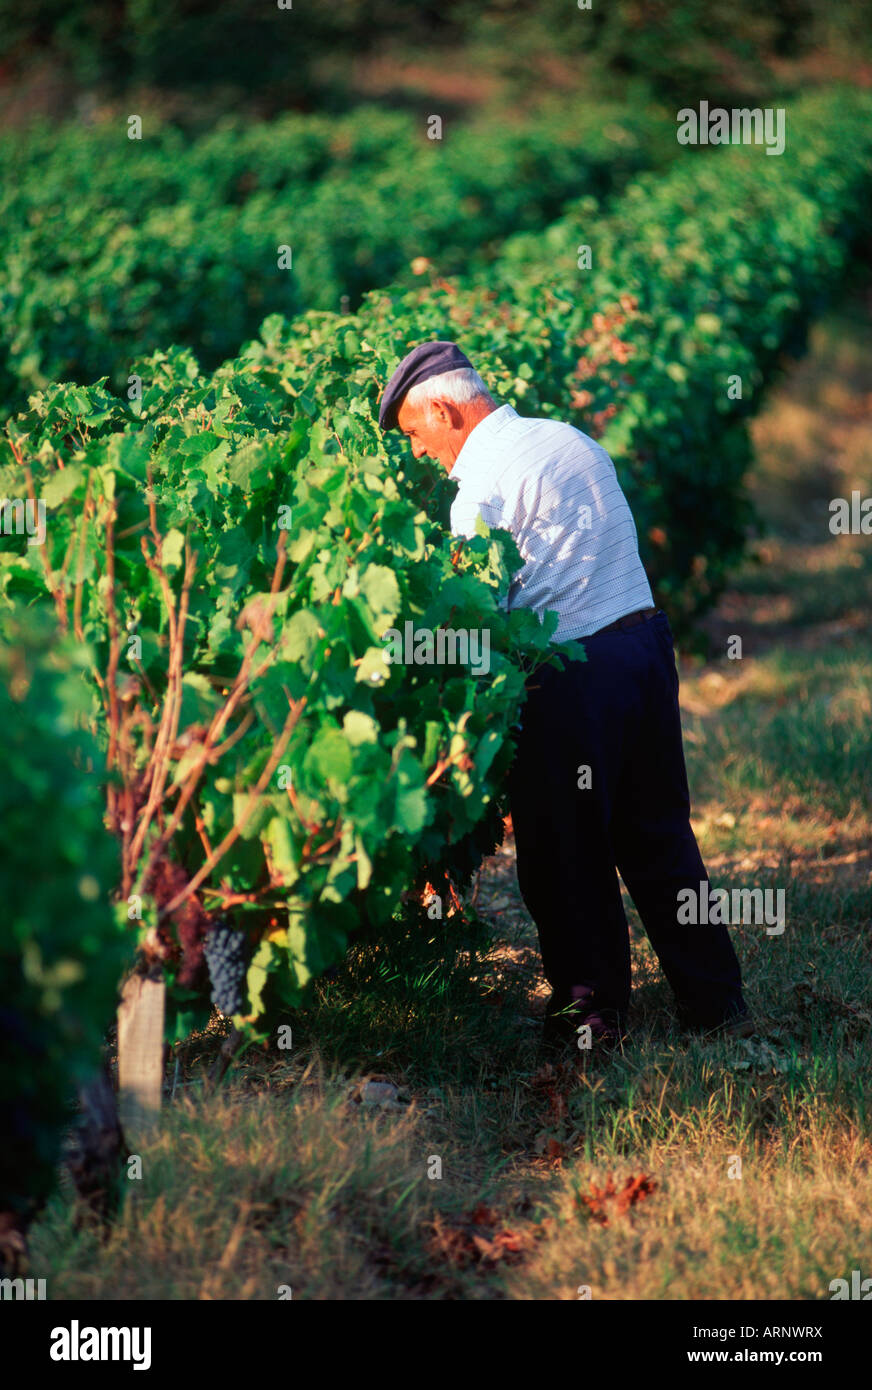 France, Burgundy countryside, vinter  checks grapes Stock Photo